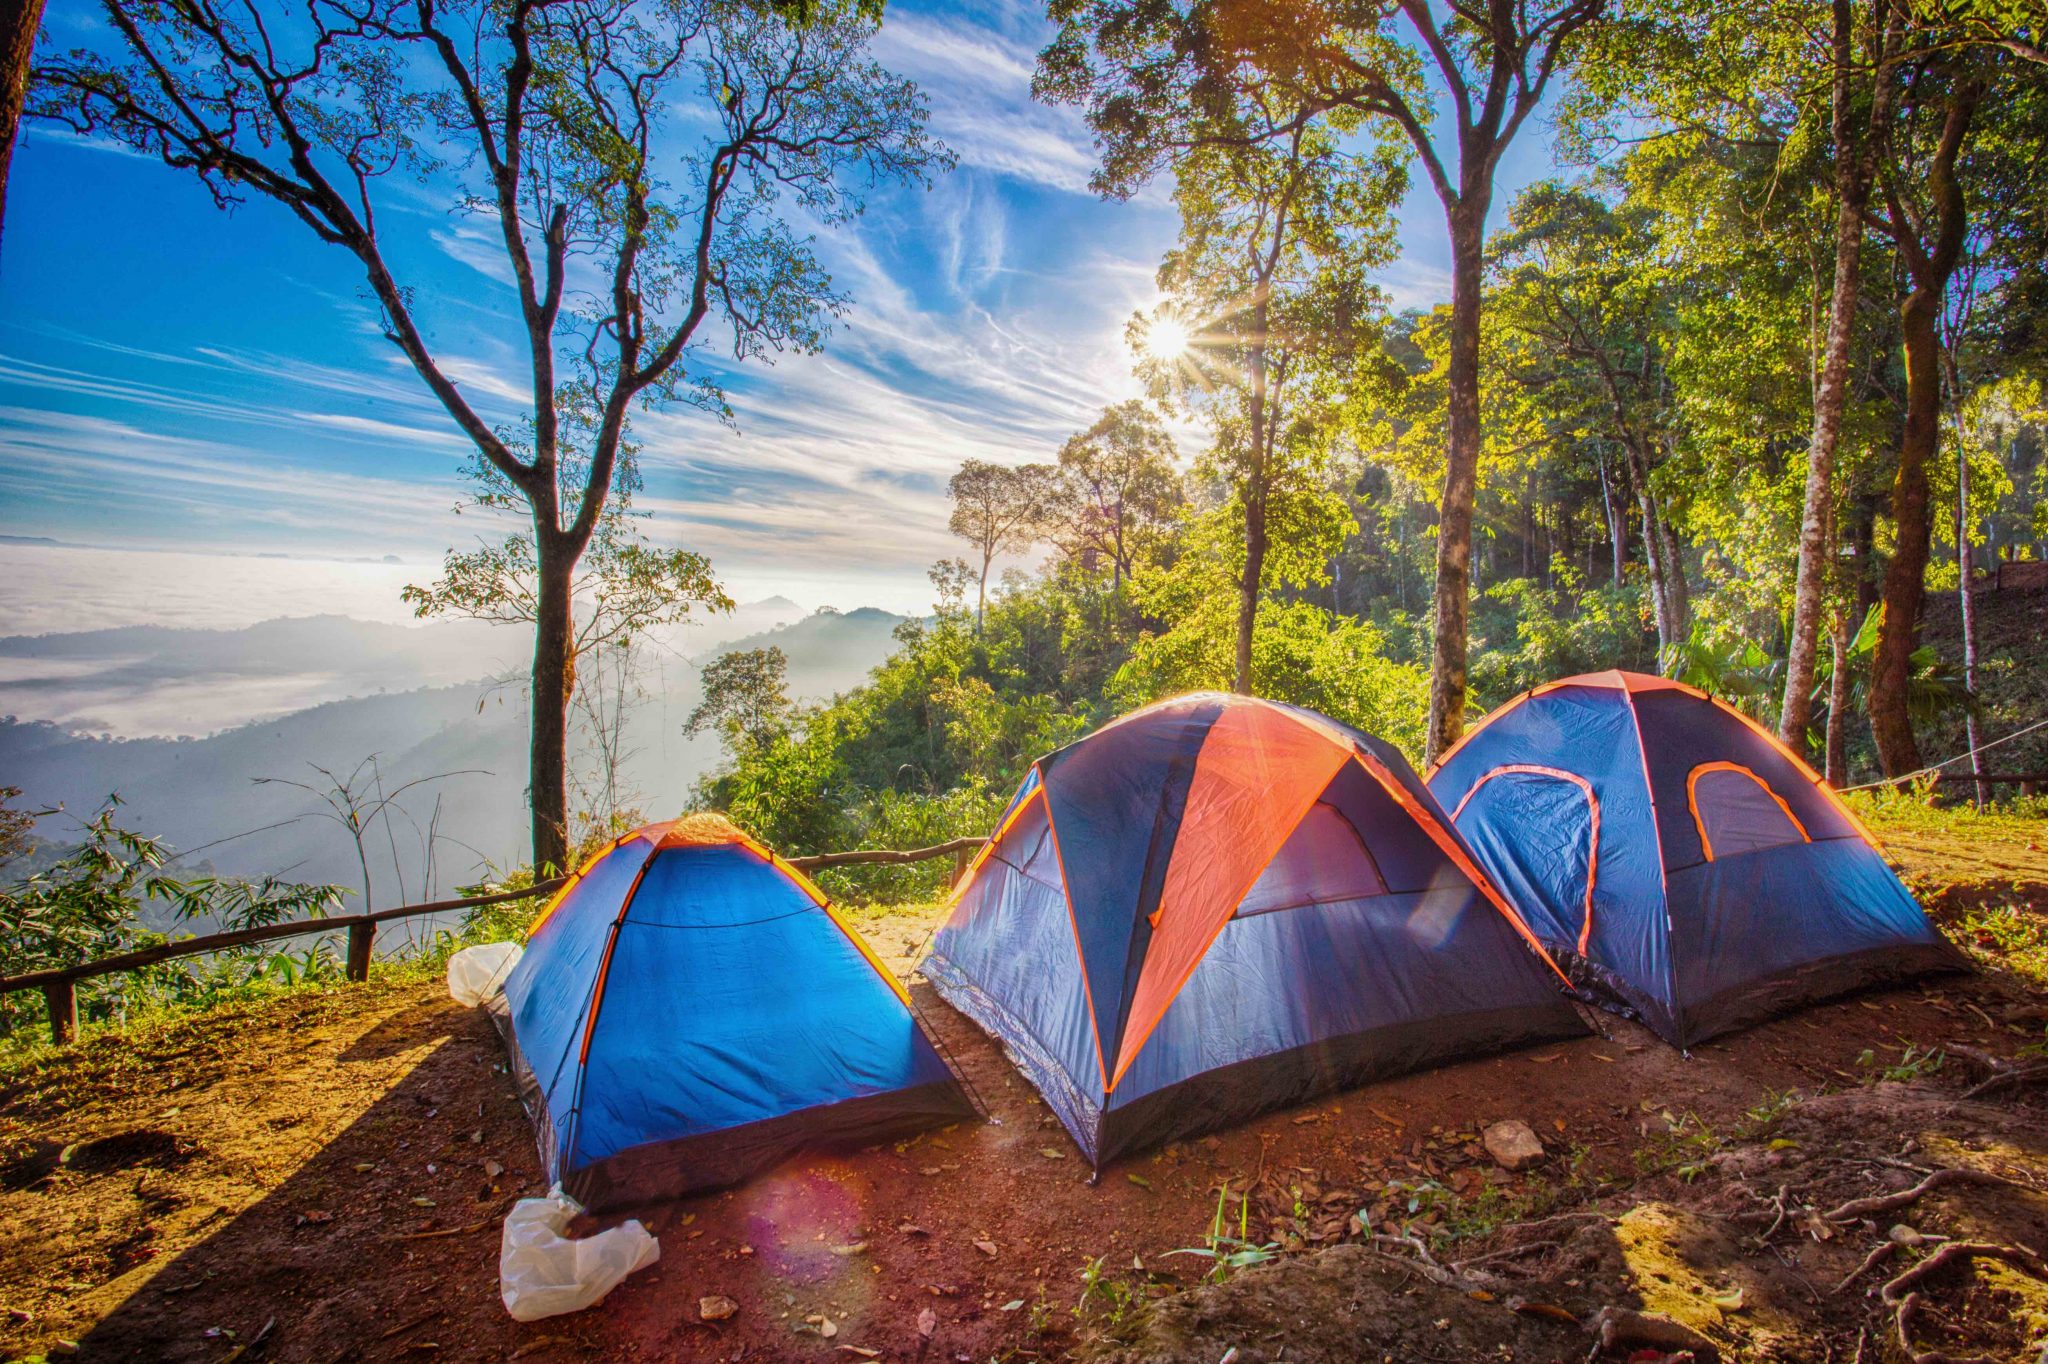 Camping hot. Палатка Ronin Camp. Палатка на природе. Туристическая палатка на природе. Палаточный кемпинг.